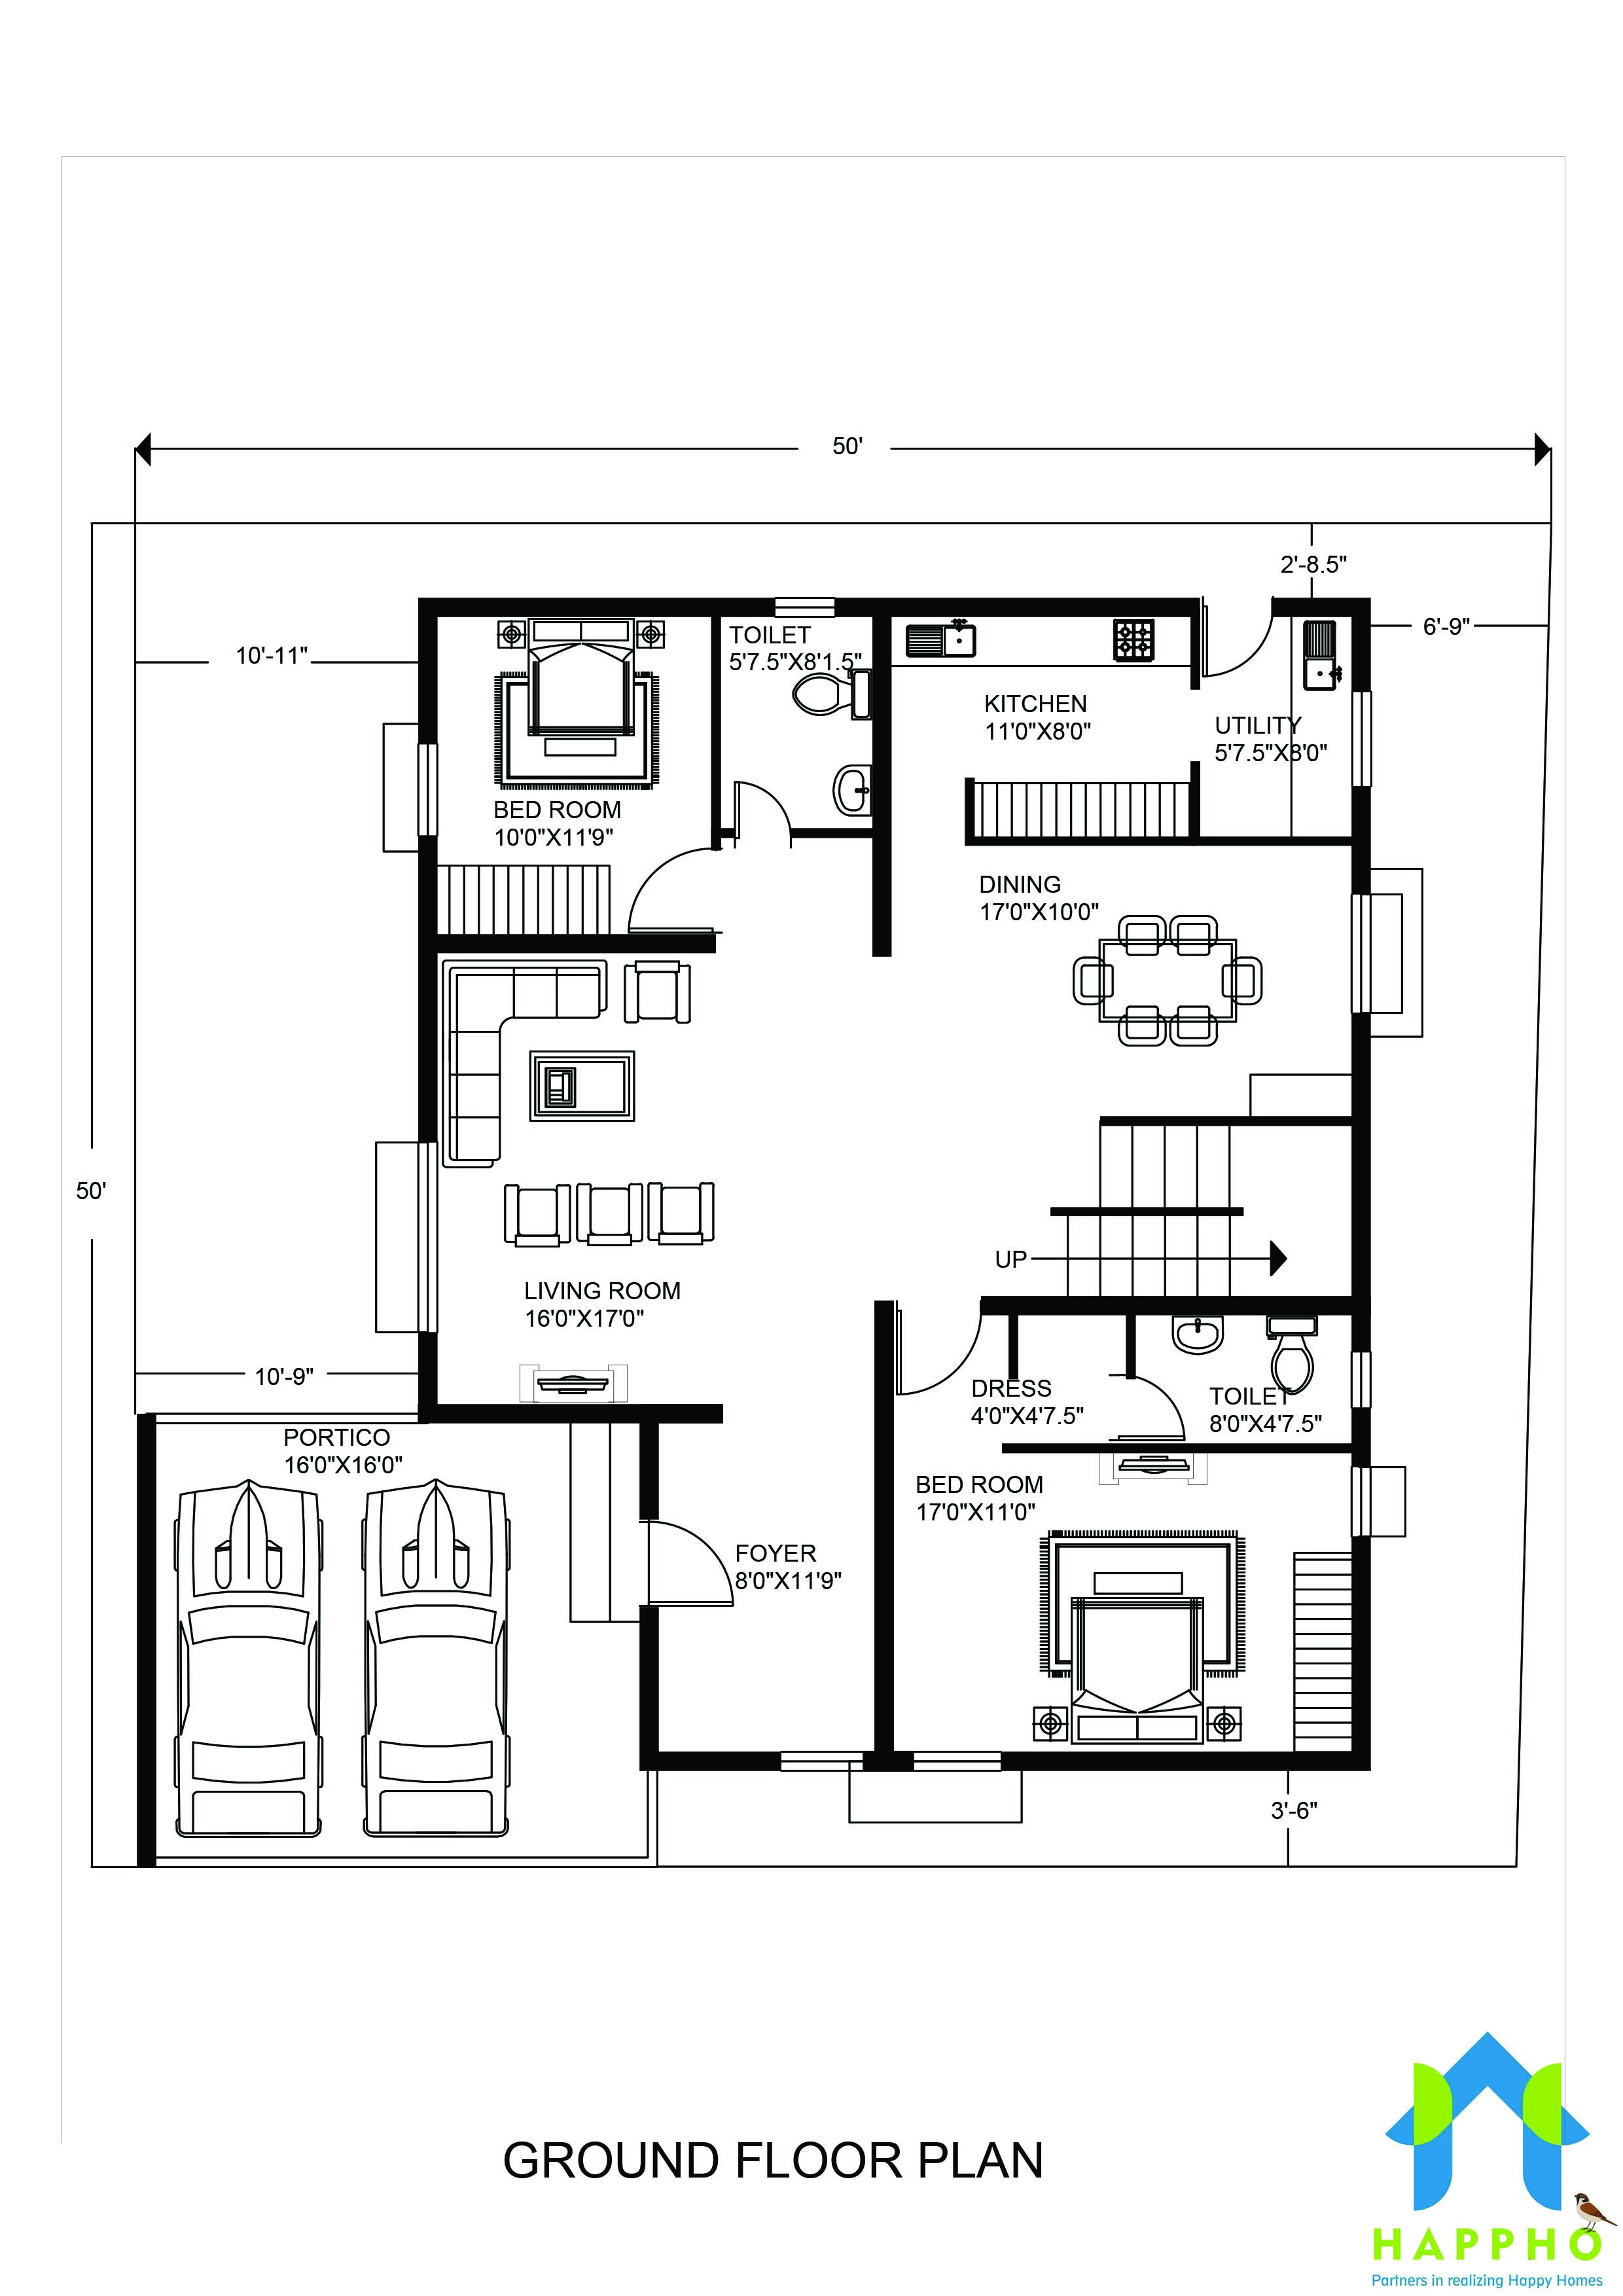 50x50 feet,2500 square feet,277 square yards,5bhk floor plan